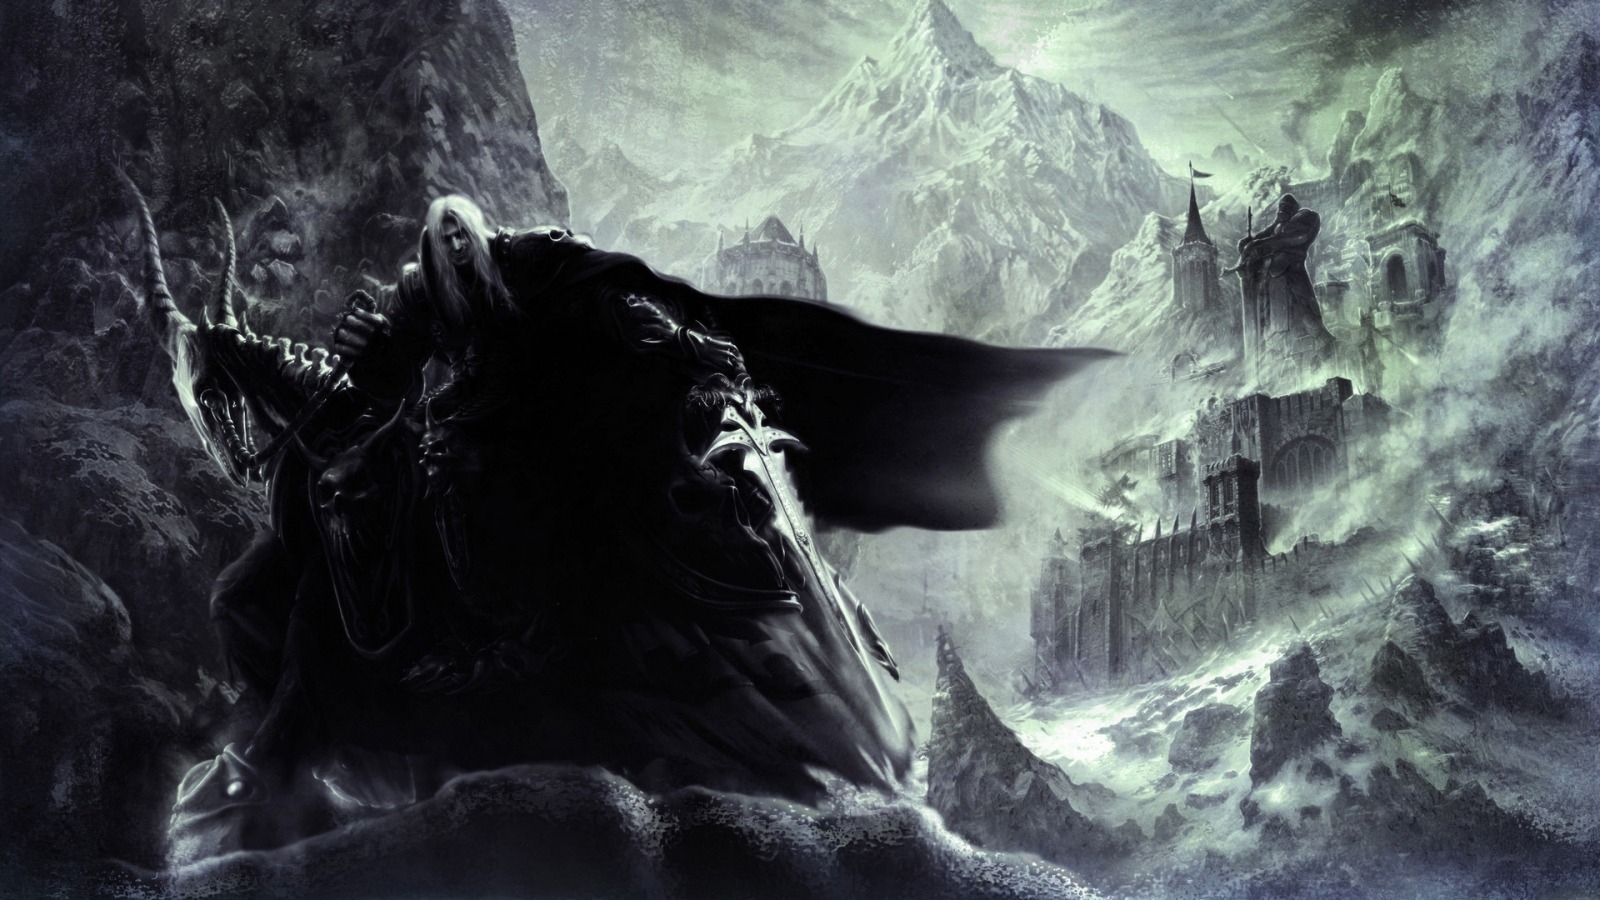 Lich King Arthas Warcraft Wallpaper High Quality